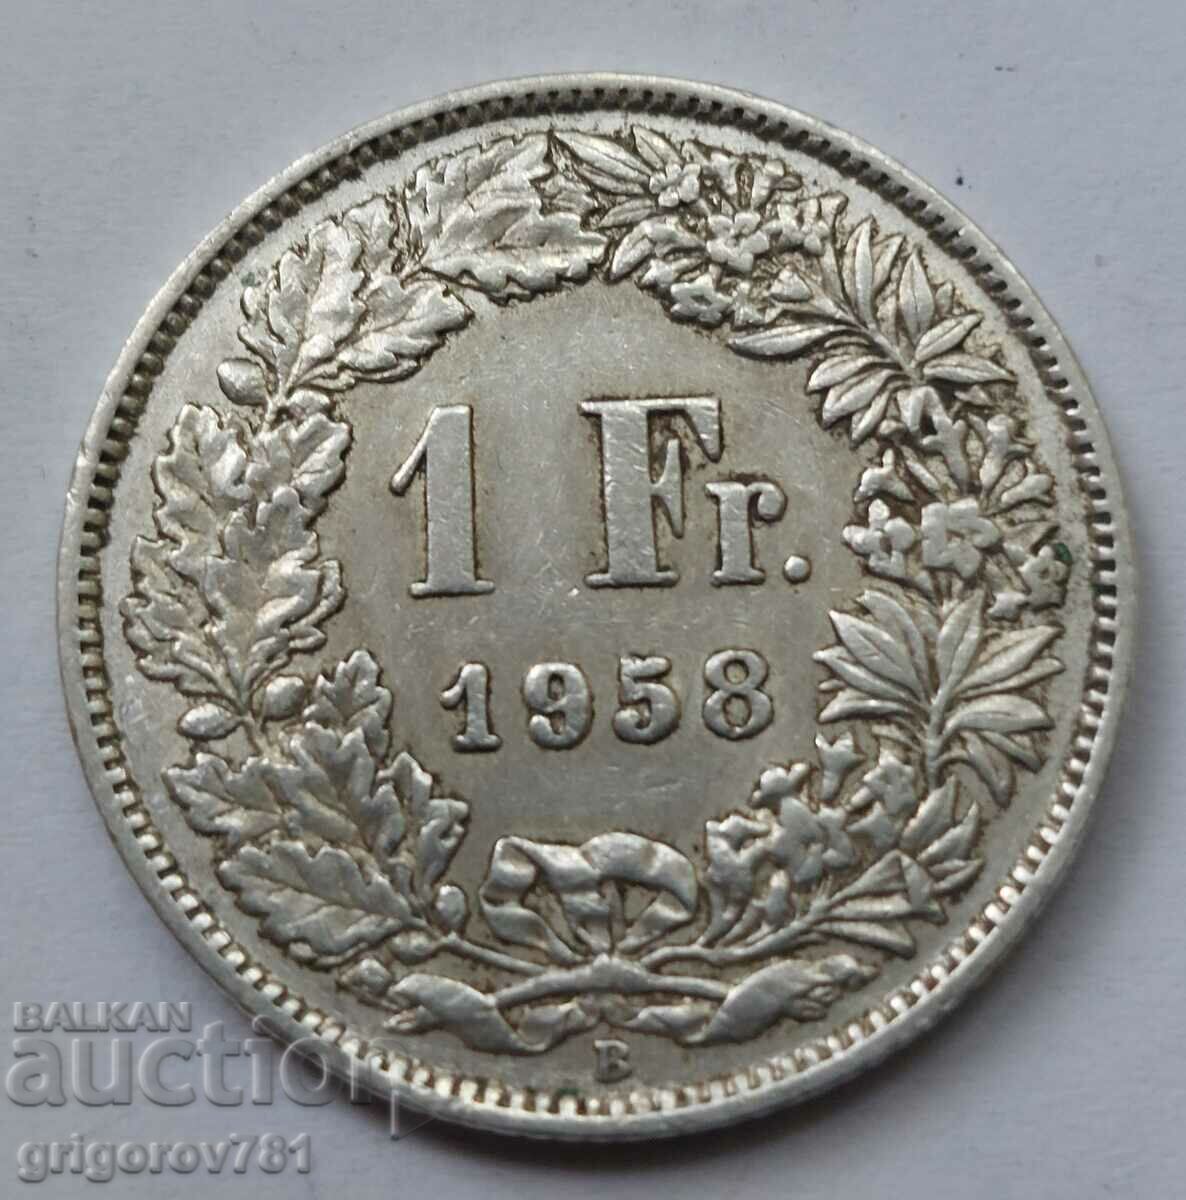 1 Franc Silver Switzerland 1958 B - Silver Coin #28